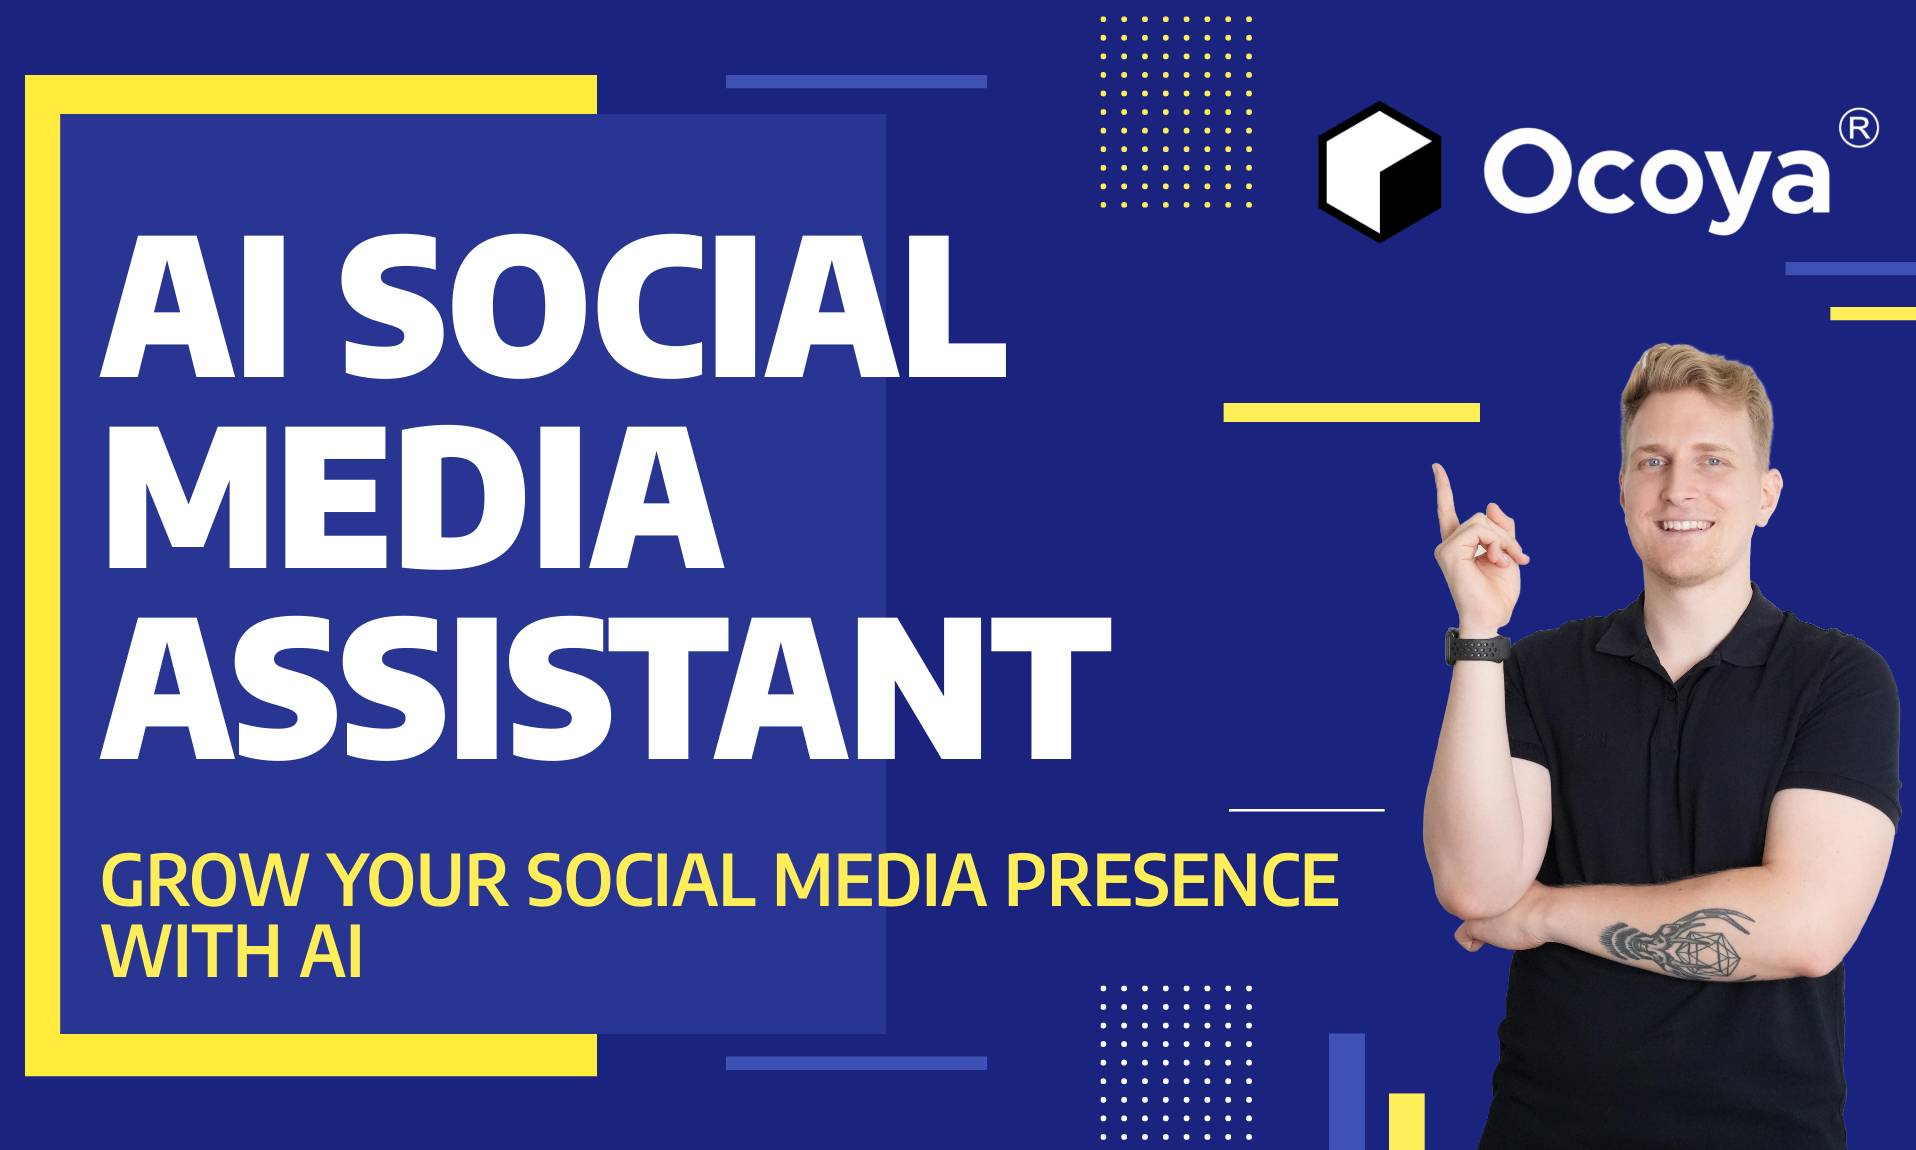 Ocoya - Your AI Social Media Assistant